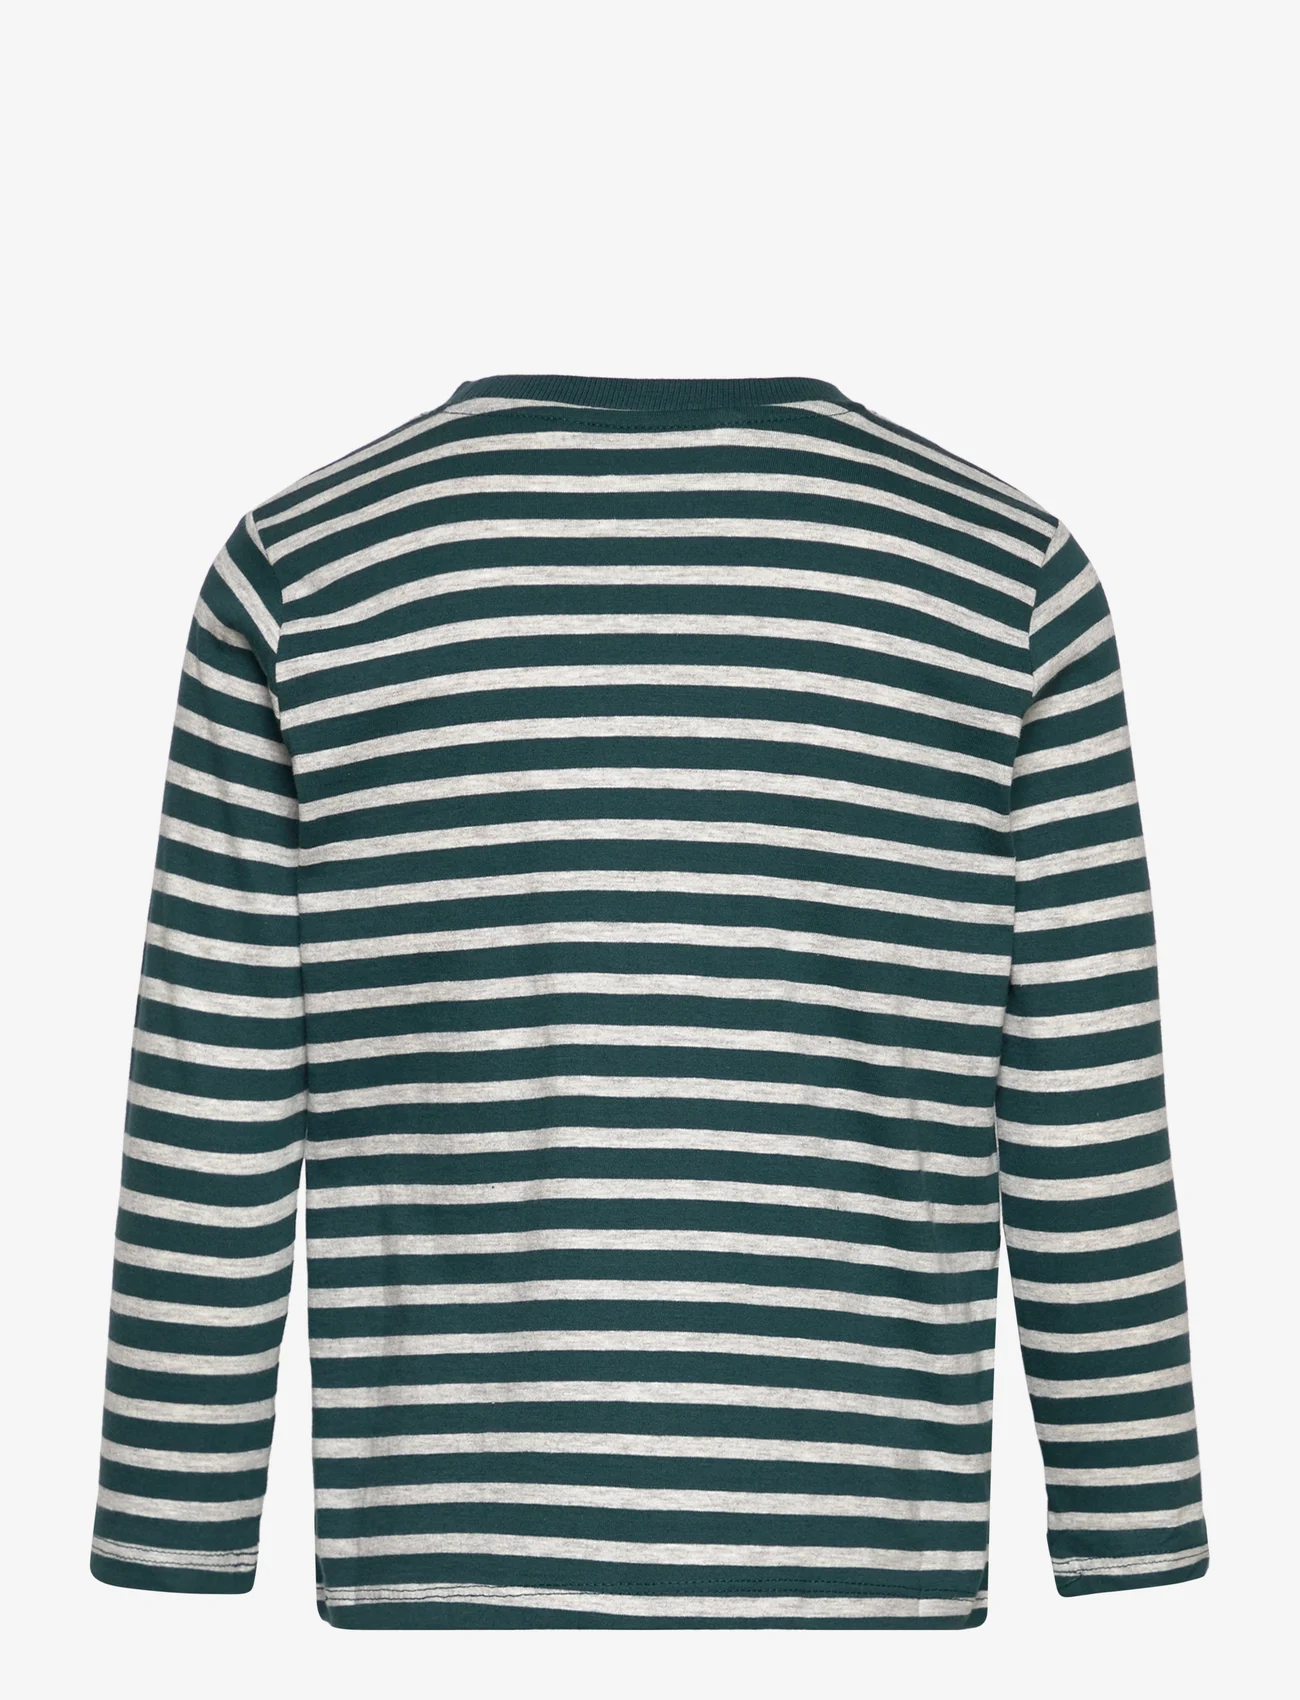 Mango - Striped long sleeves t-shirt - pitkähihaiset t-paidat - dark green - 1